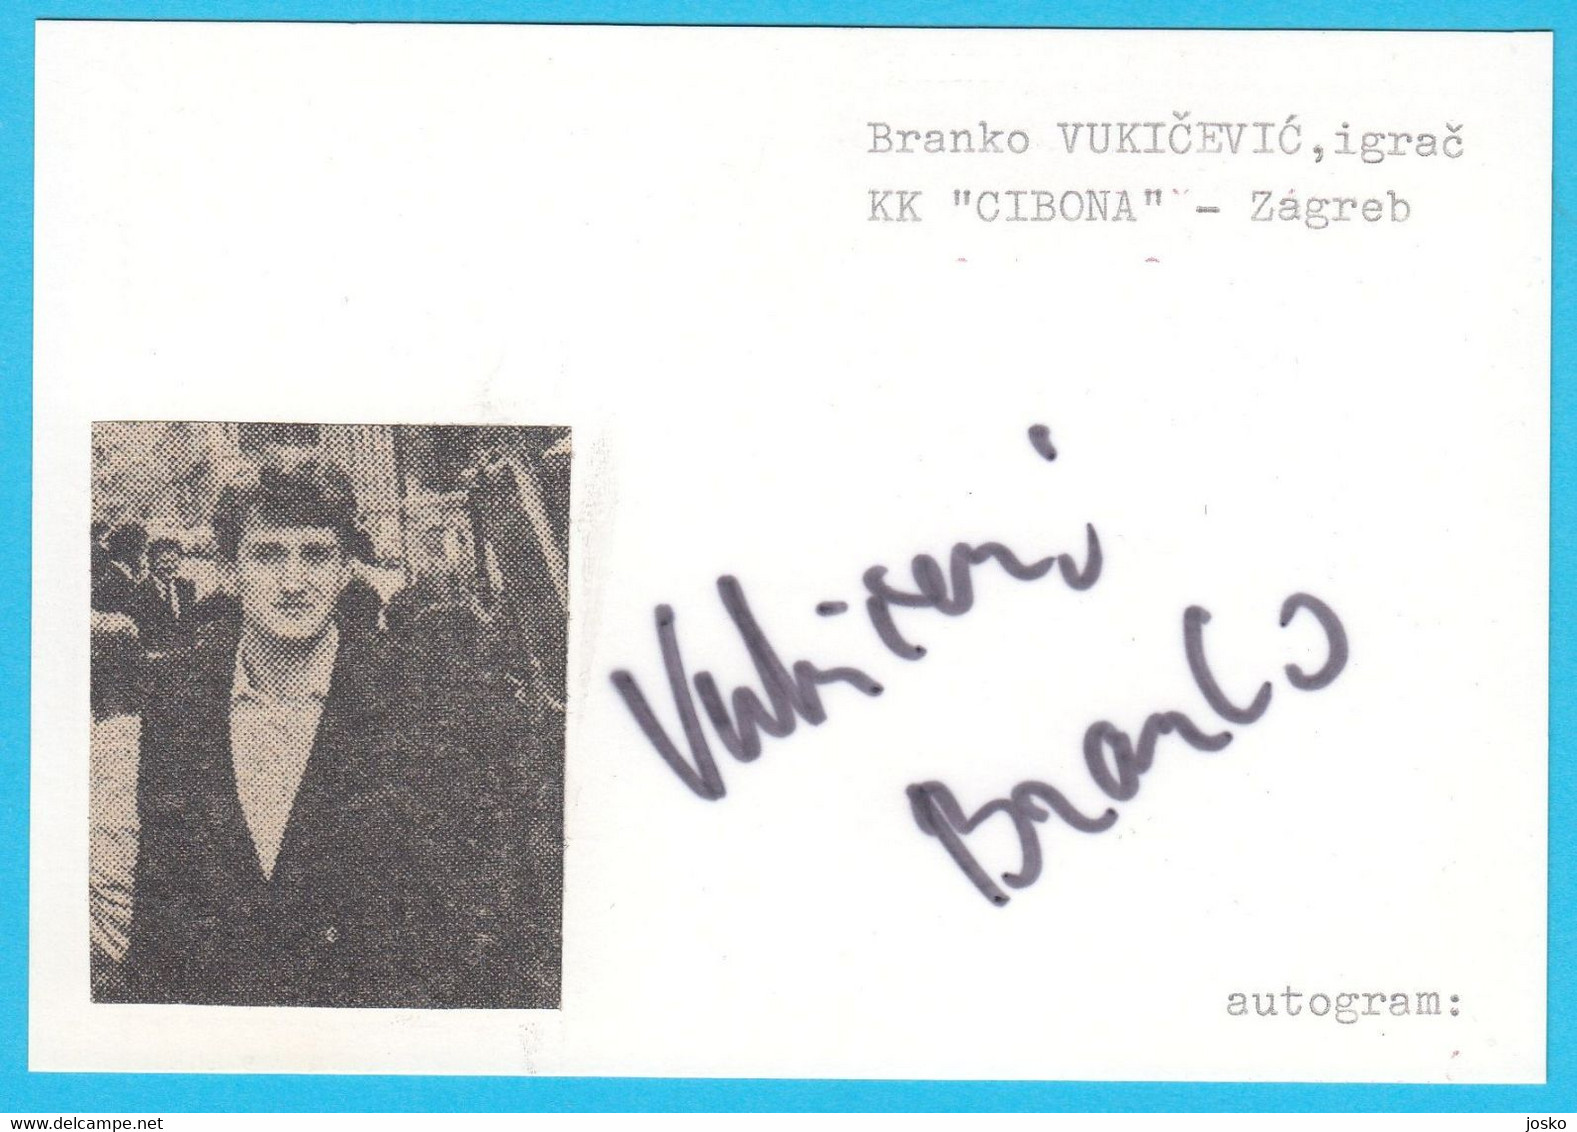 BRANKO VUKICEVIC - Yugoslavia Basketball Team BRONZE MEDAL On Olympic Games 1984 * Basket-ball Pallacanestro Baloncesto - Autographes